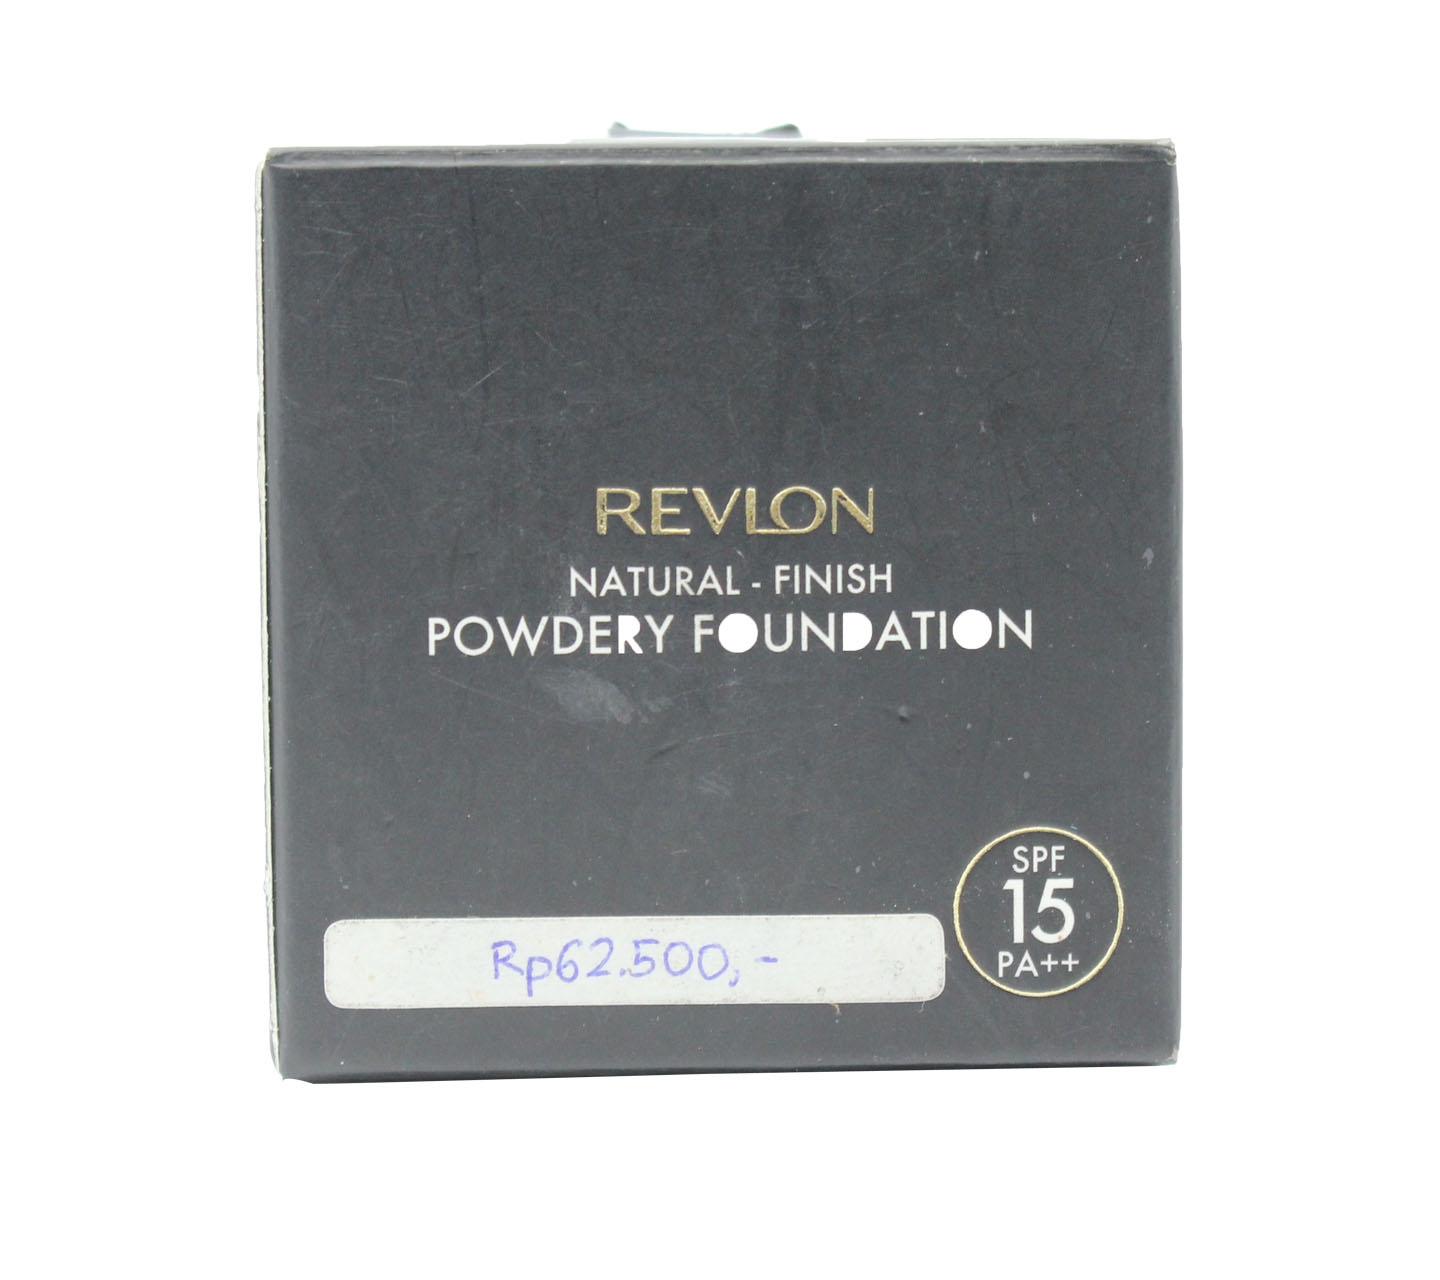 Revlon Natural Finish Powdery Foundation SPF 15 PA ++ 032 - Peach